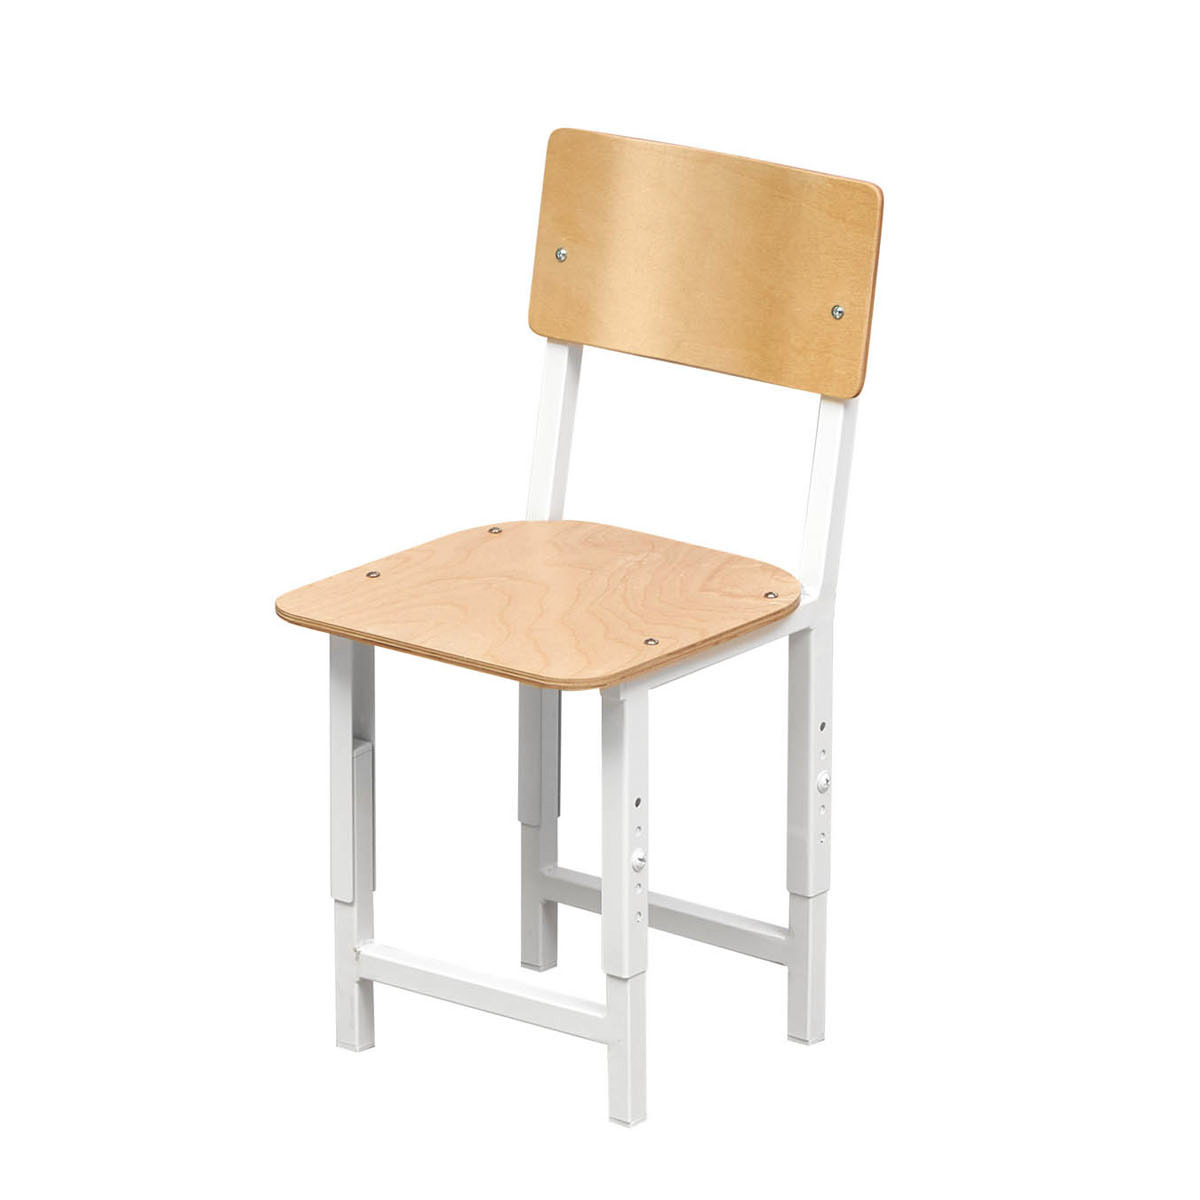 стул для ученика без колес